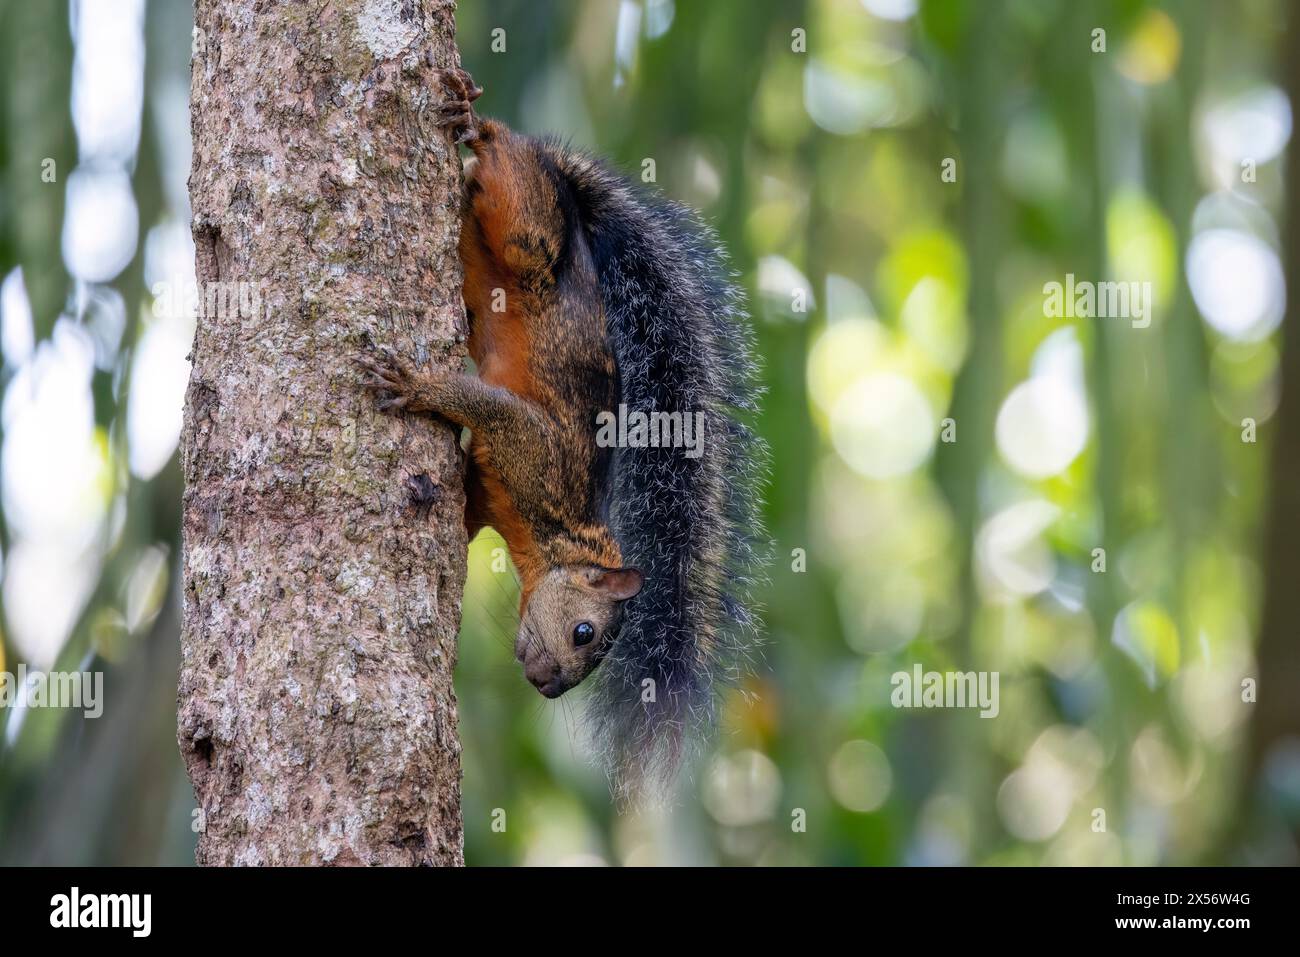 Eichhörnchen (Sciurus variegatoides) kletternd den Baum hinunter - Boca Tapada, Costa Rica Stockfoto